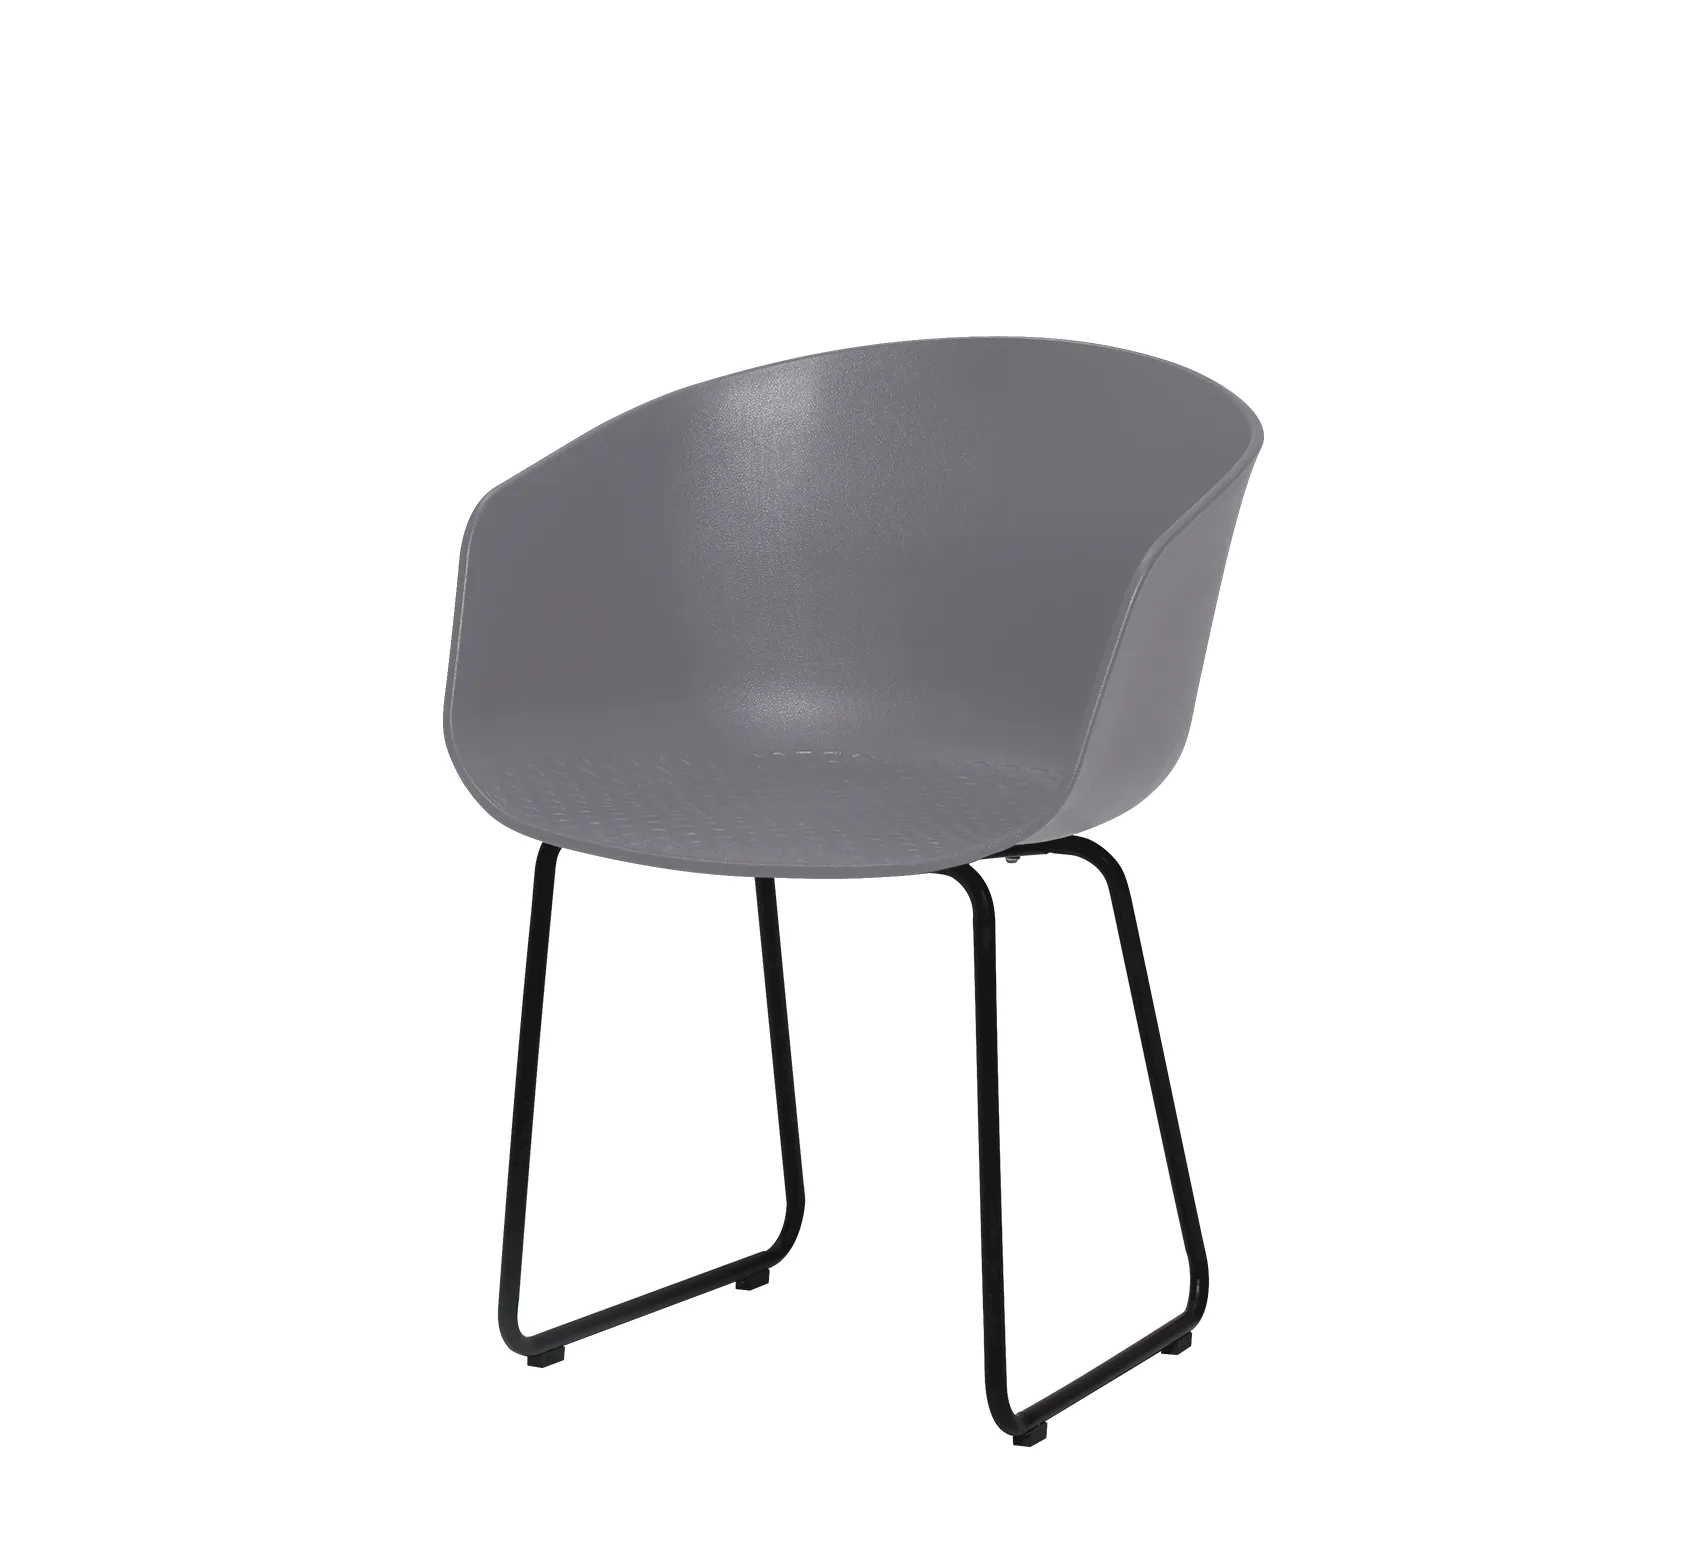 Olymplast Bubble Chair A - GREY